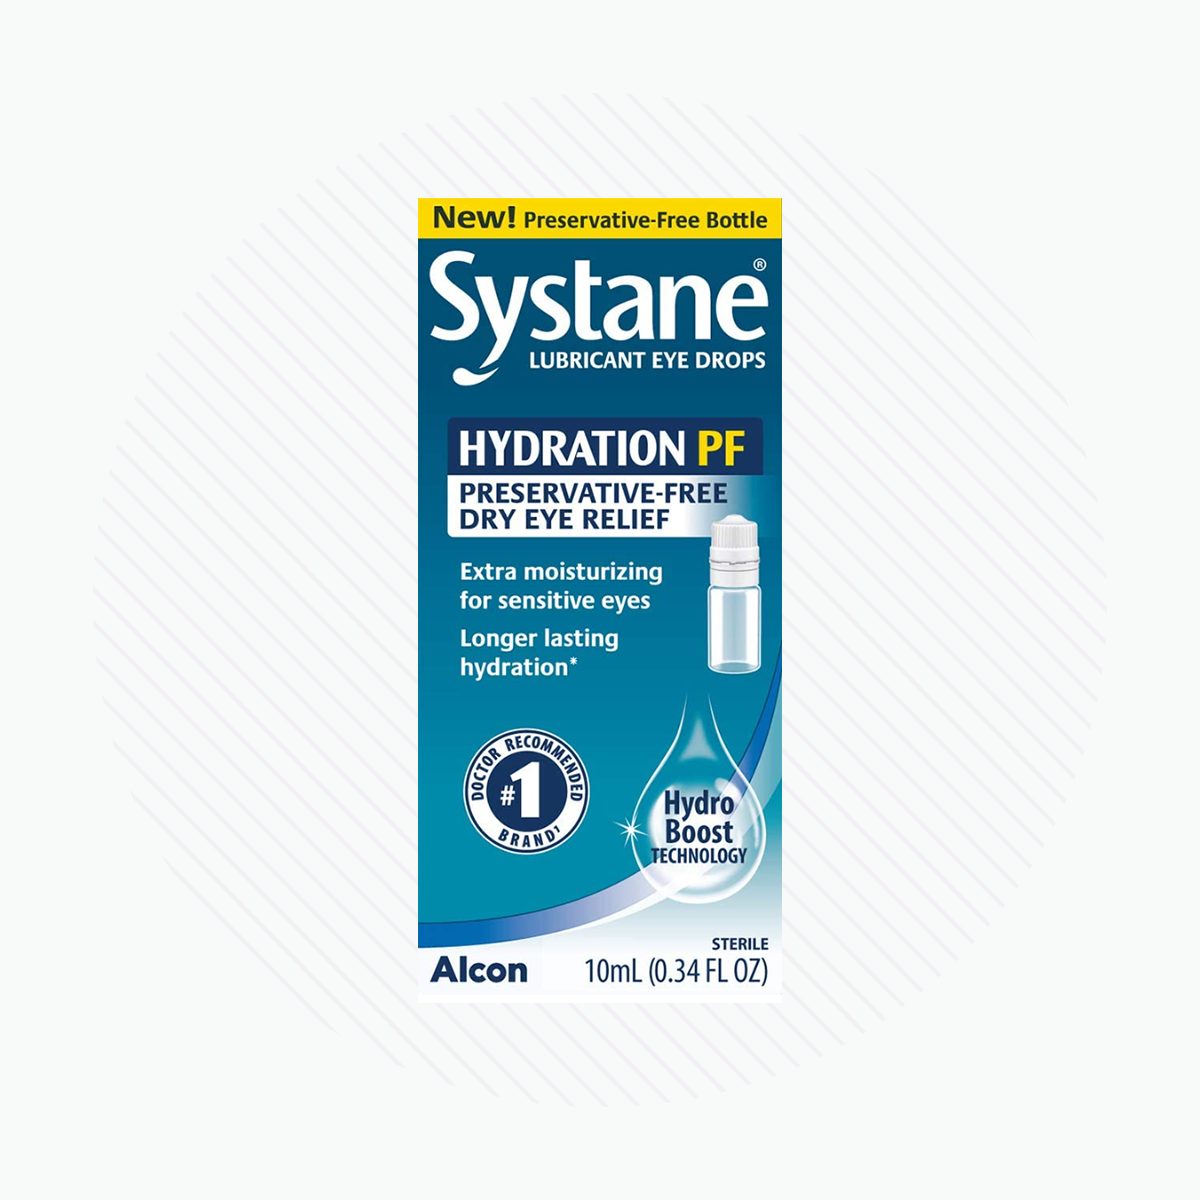 Systane Hydration Pf Lubricant Eye Drops (Preservative Free Multidose Bottle) 10ml